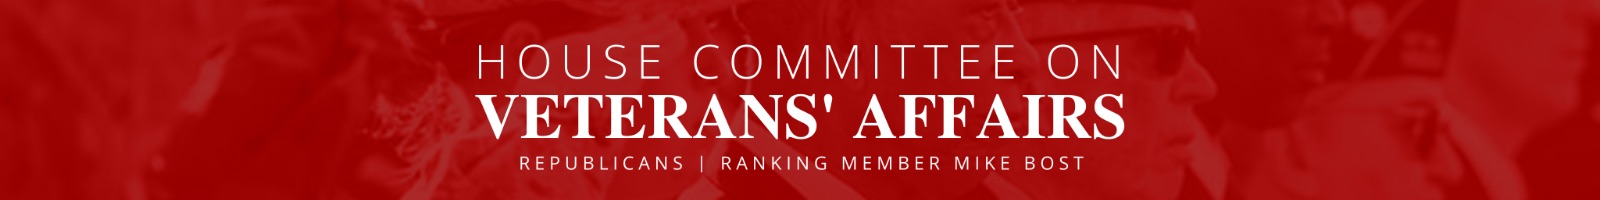 House committee on veterans affairs ranking member